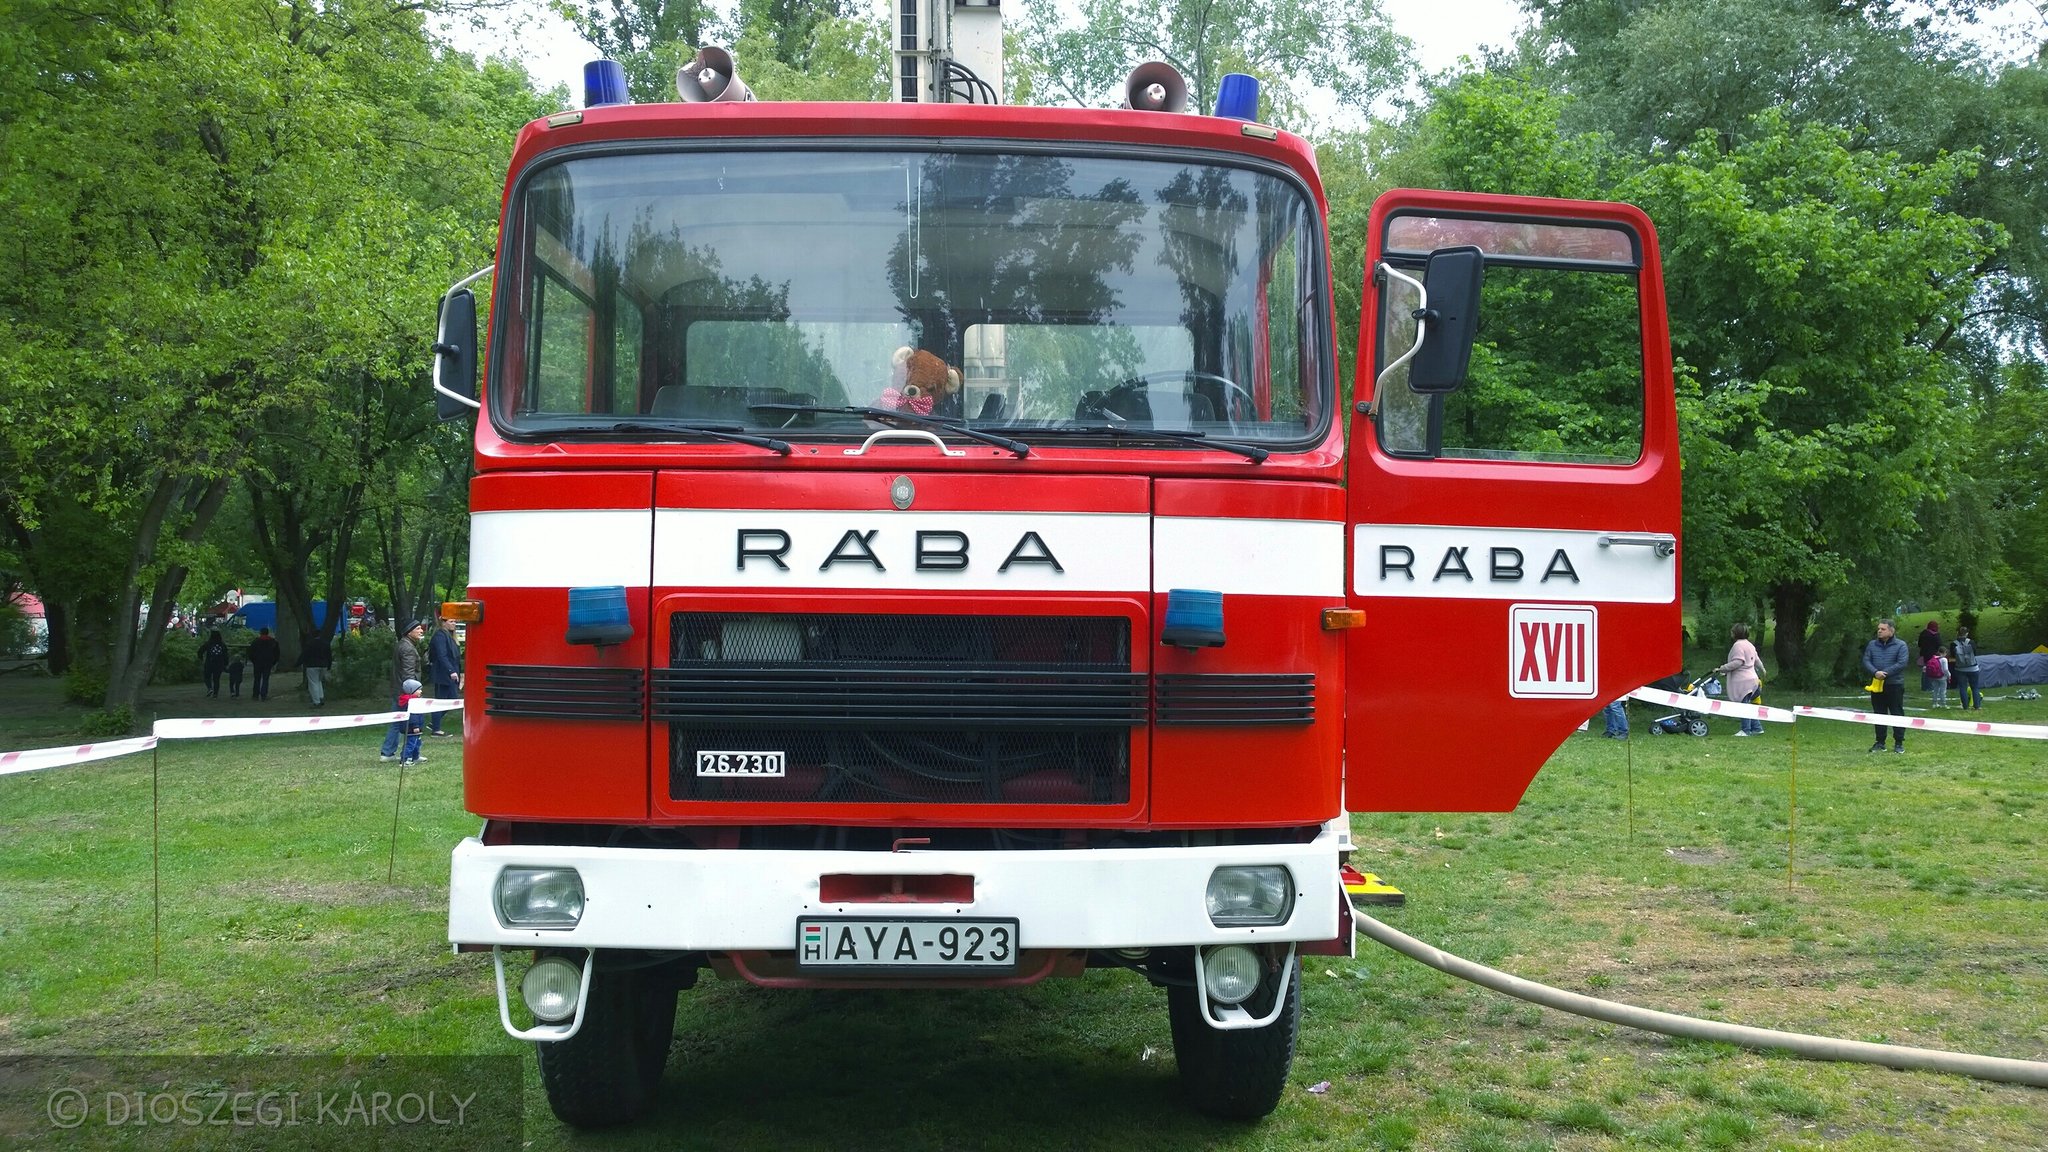 Raba Fire Truck Wallpapers